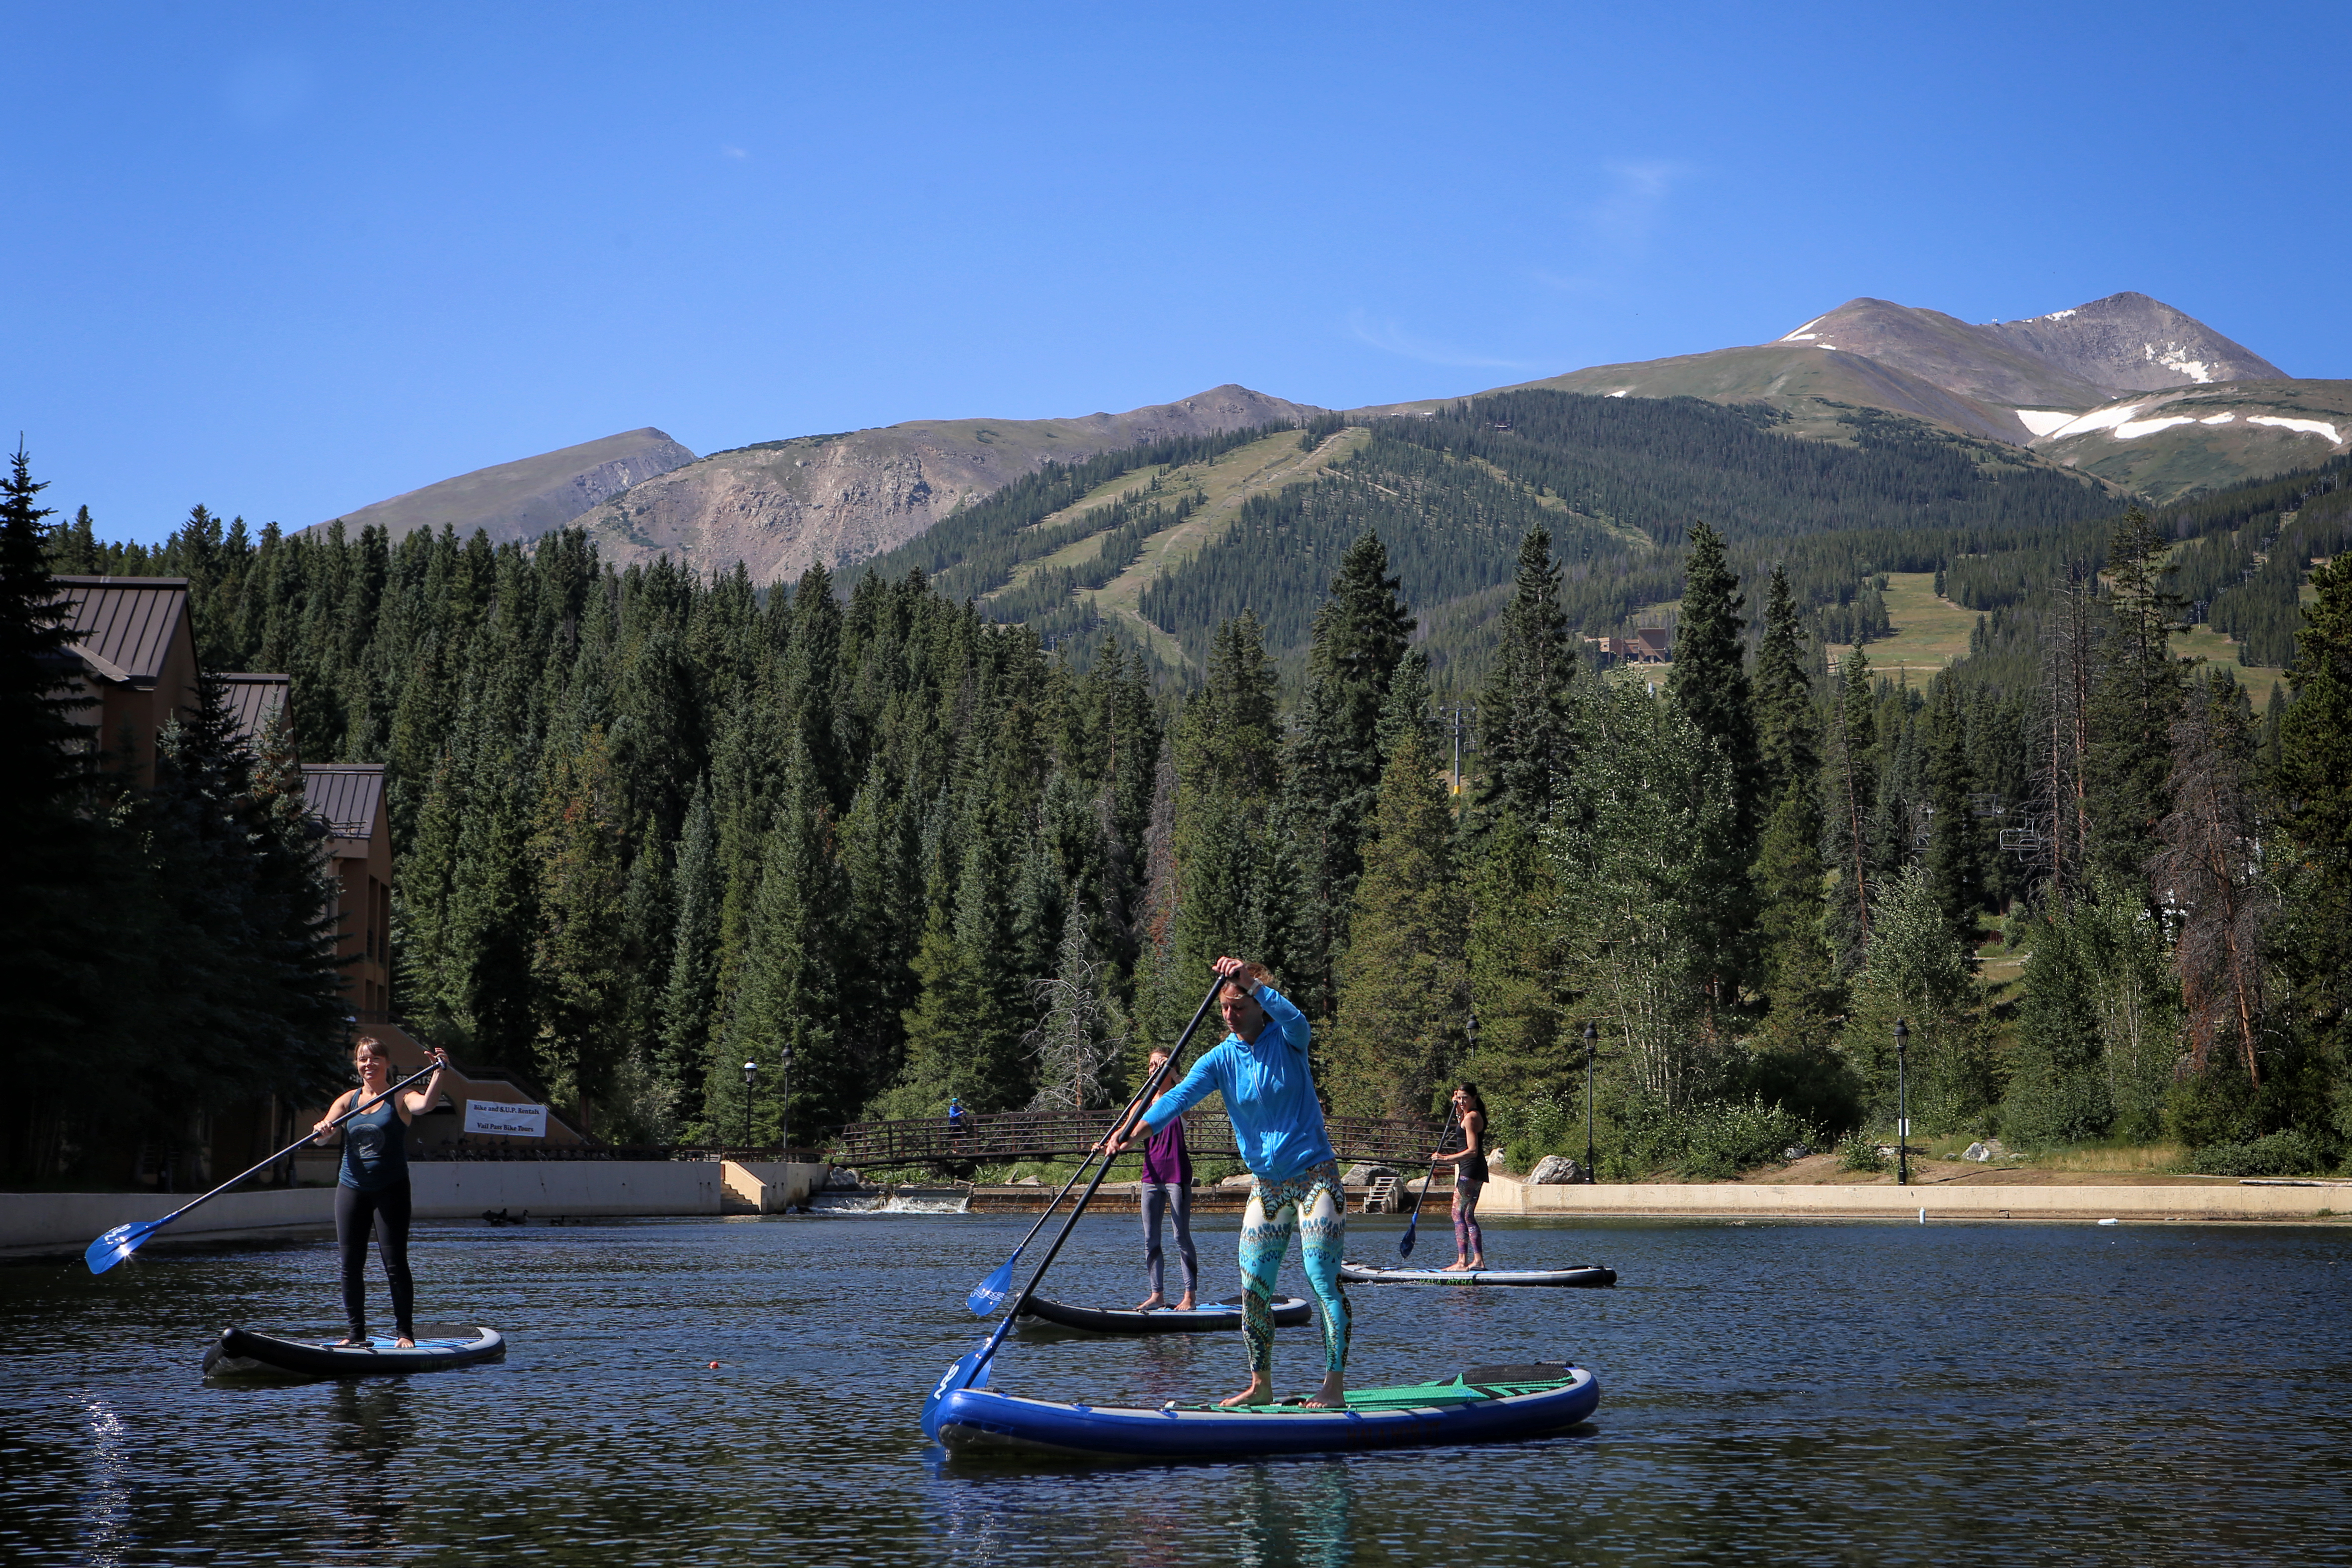 Stand Up paddle Boarding in Maggie Pond, Breckenridge Colorado